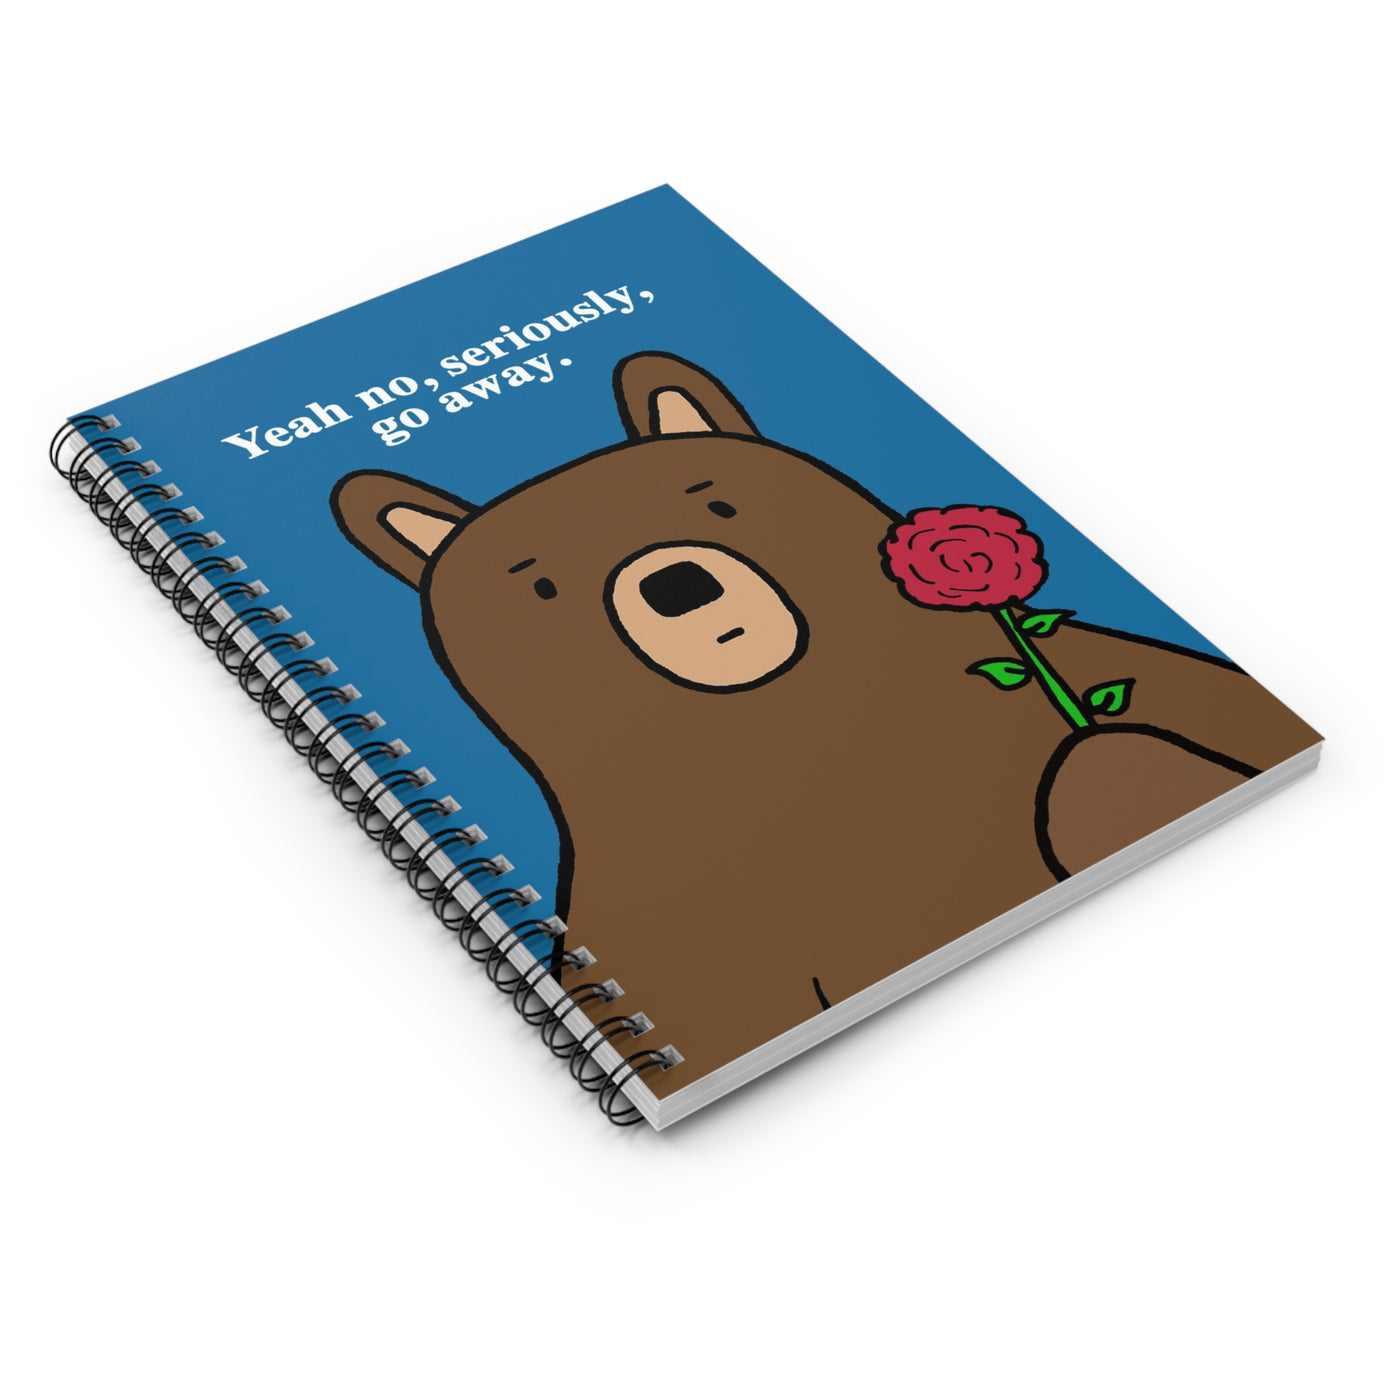 Bear Says Go Away Small Notebook - Ruled Line